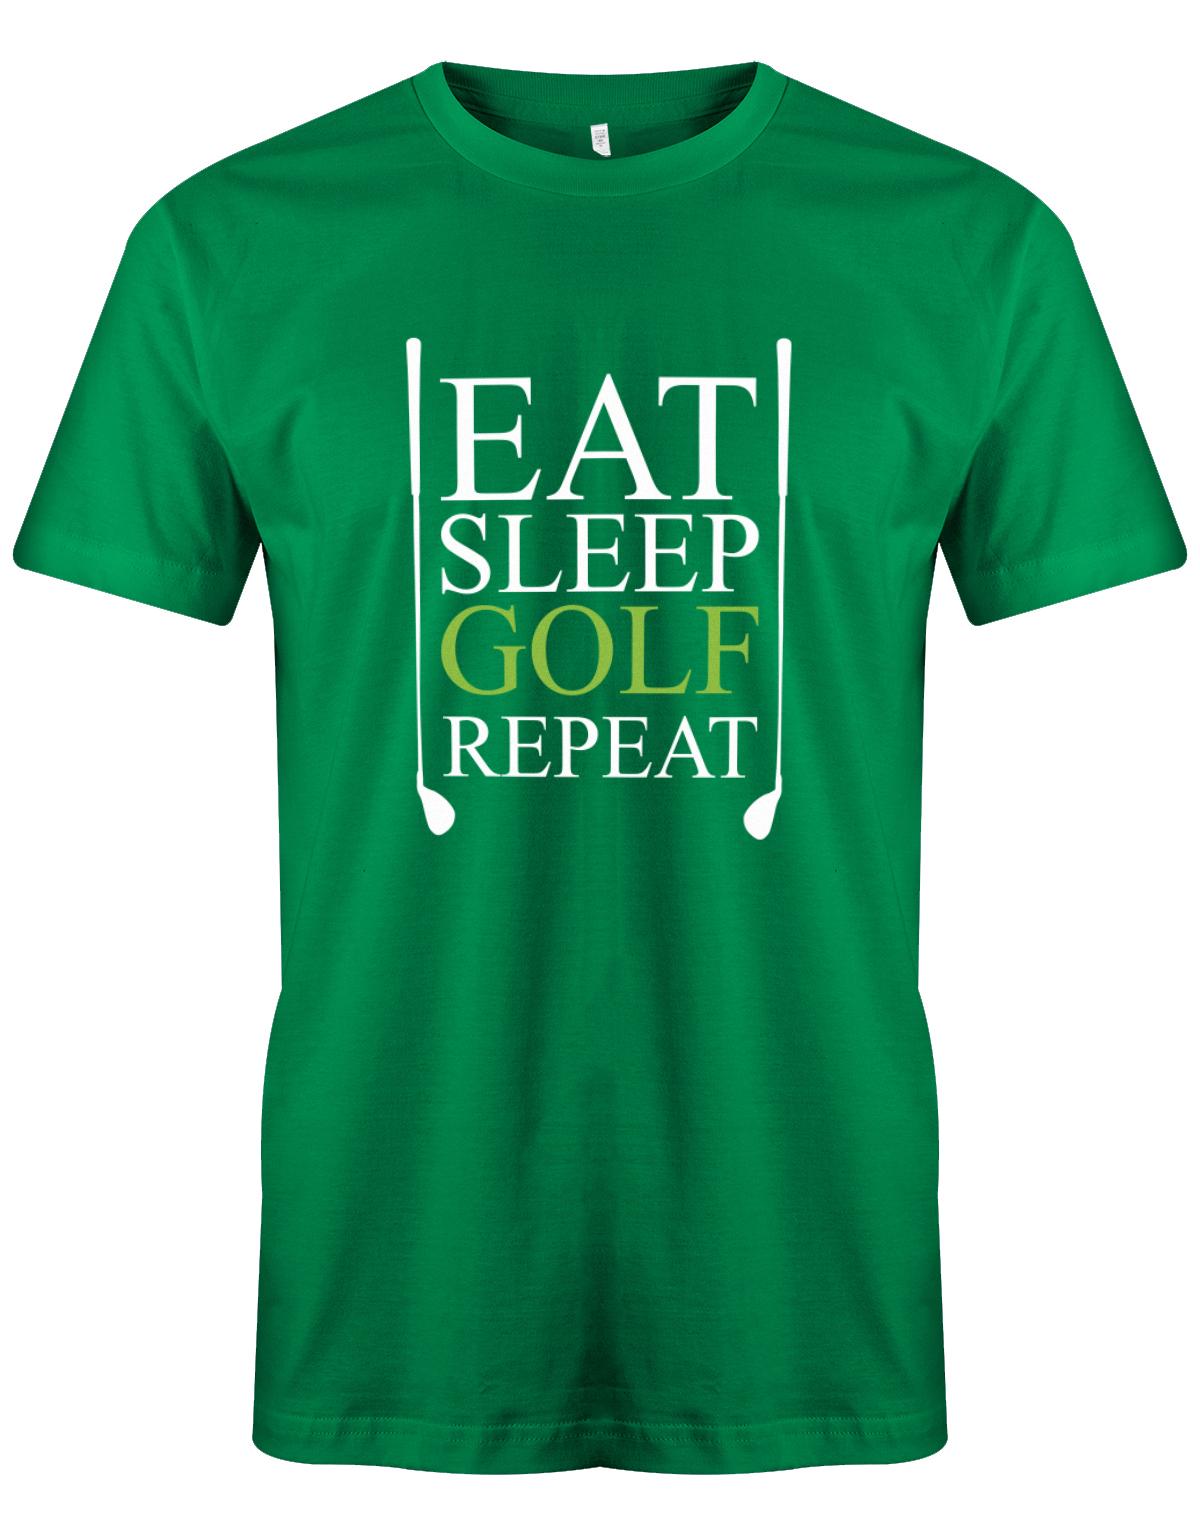 East-Sleep-golf-Repeat-Herren-Shirt-Gruen